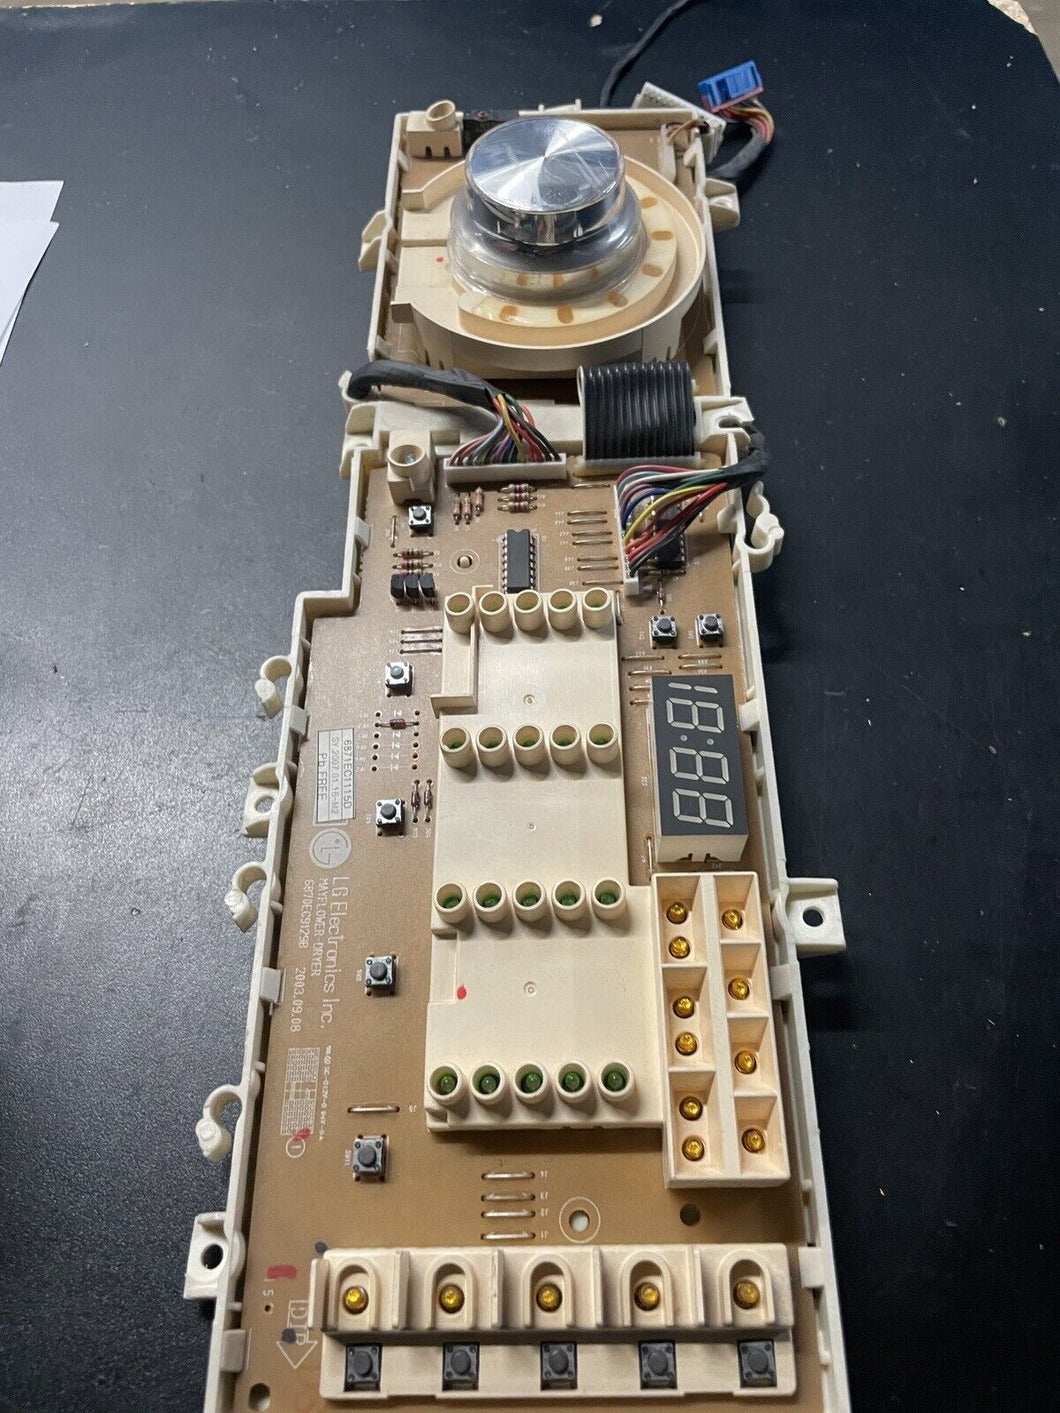 LG Dryer Interface Control Board | 6871EC1115D |WMV327